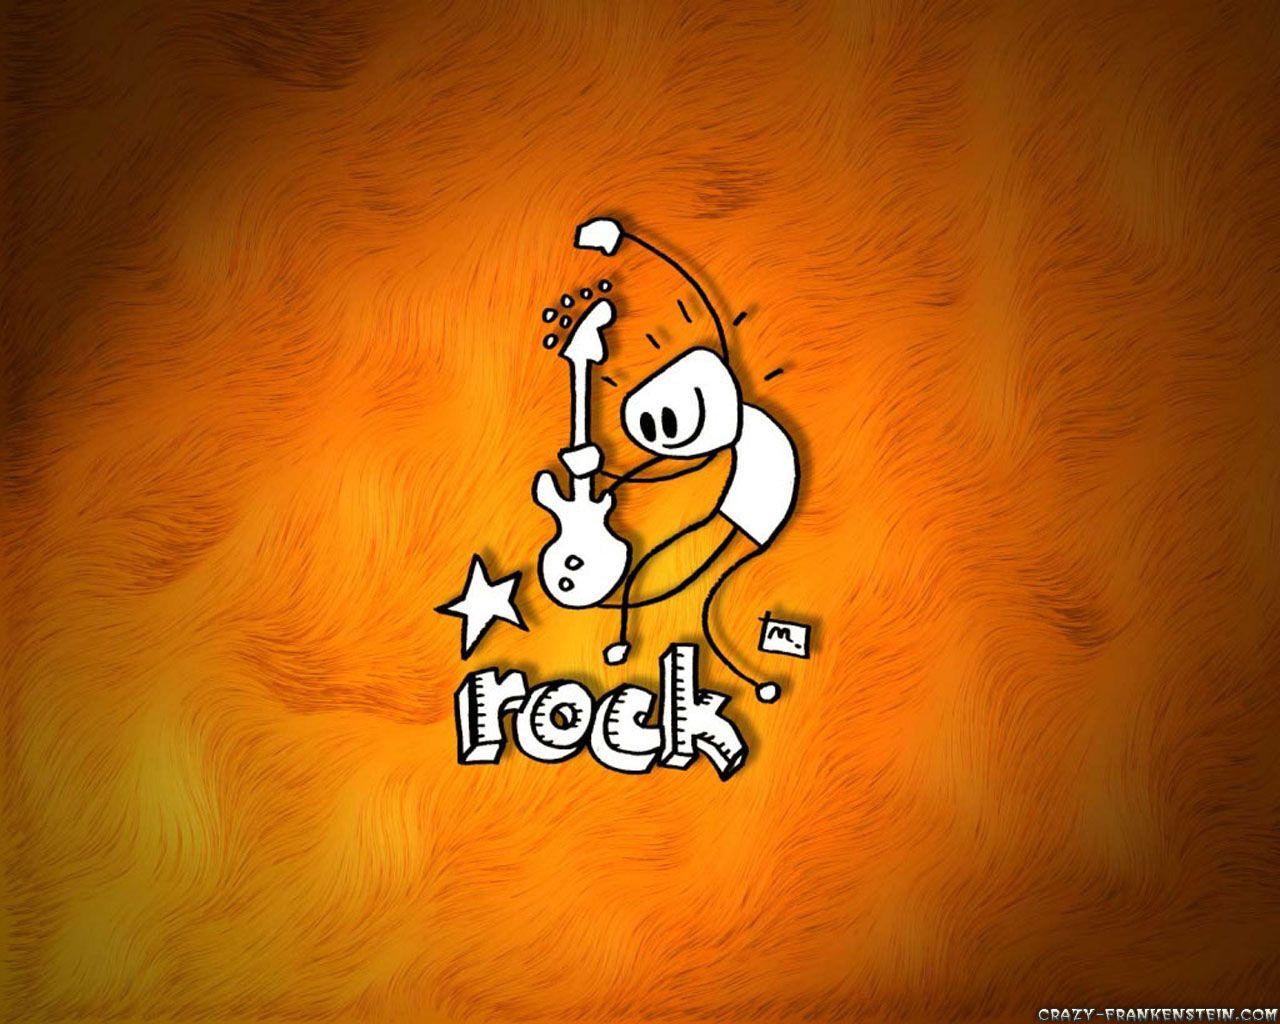 Rock wallpaper